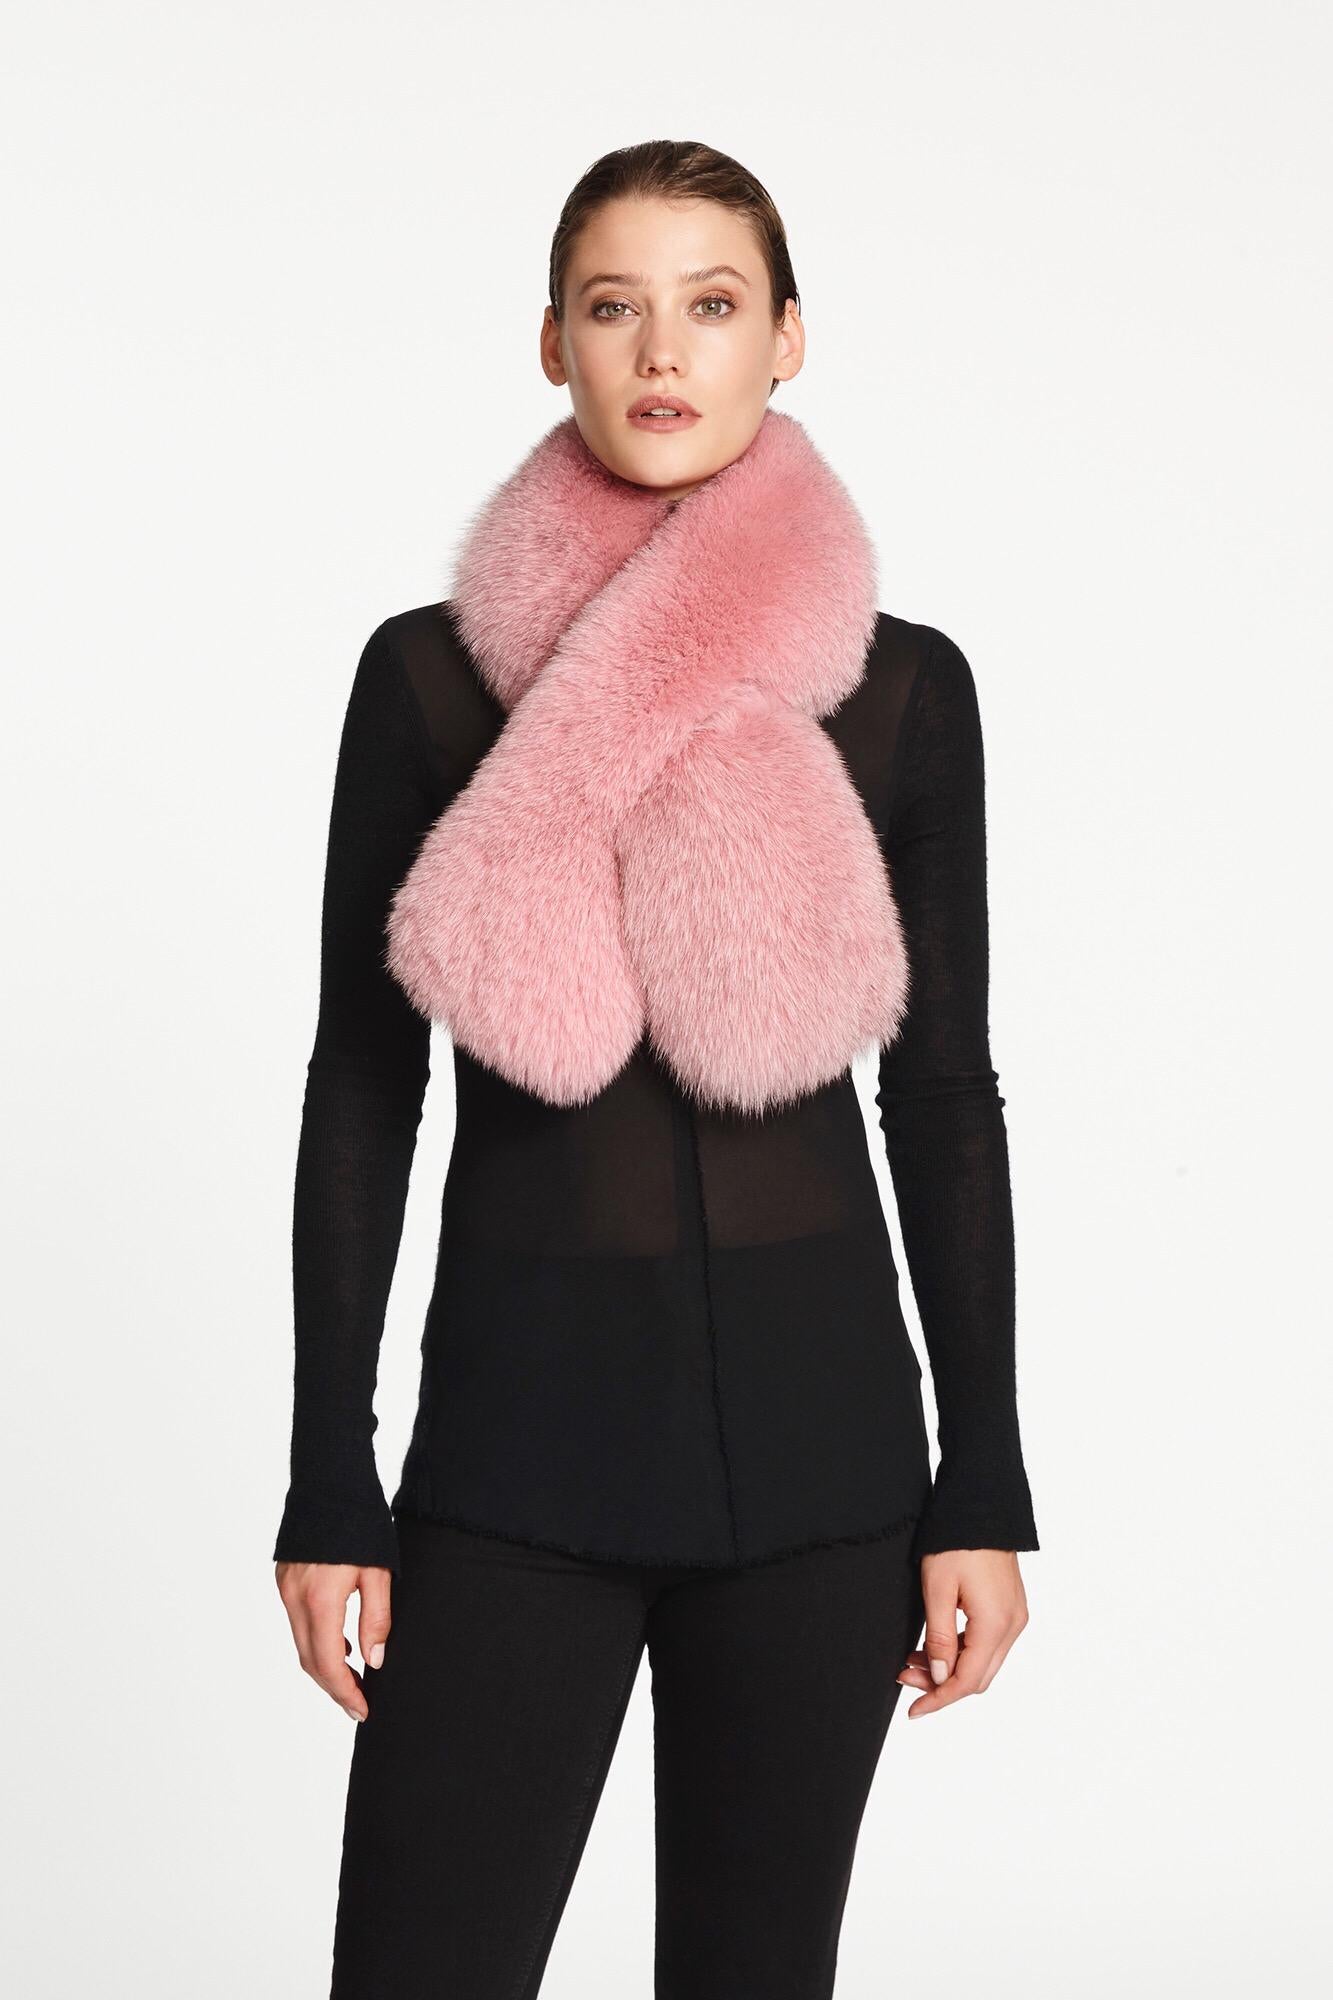 Verheyen London Lapel Cross-through Collar in Rose Petal in Fox Fur 1